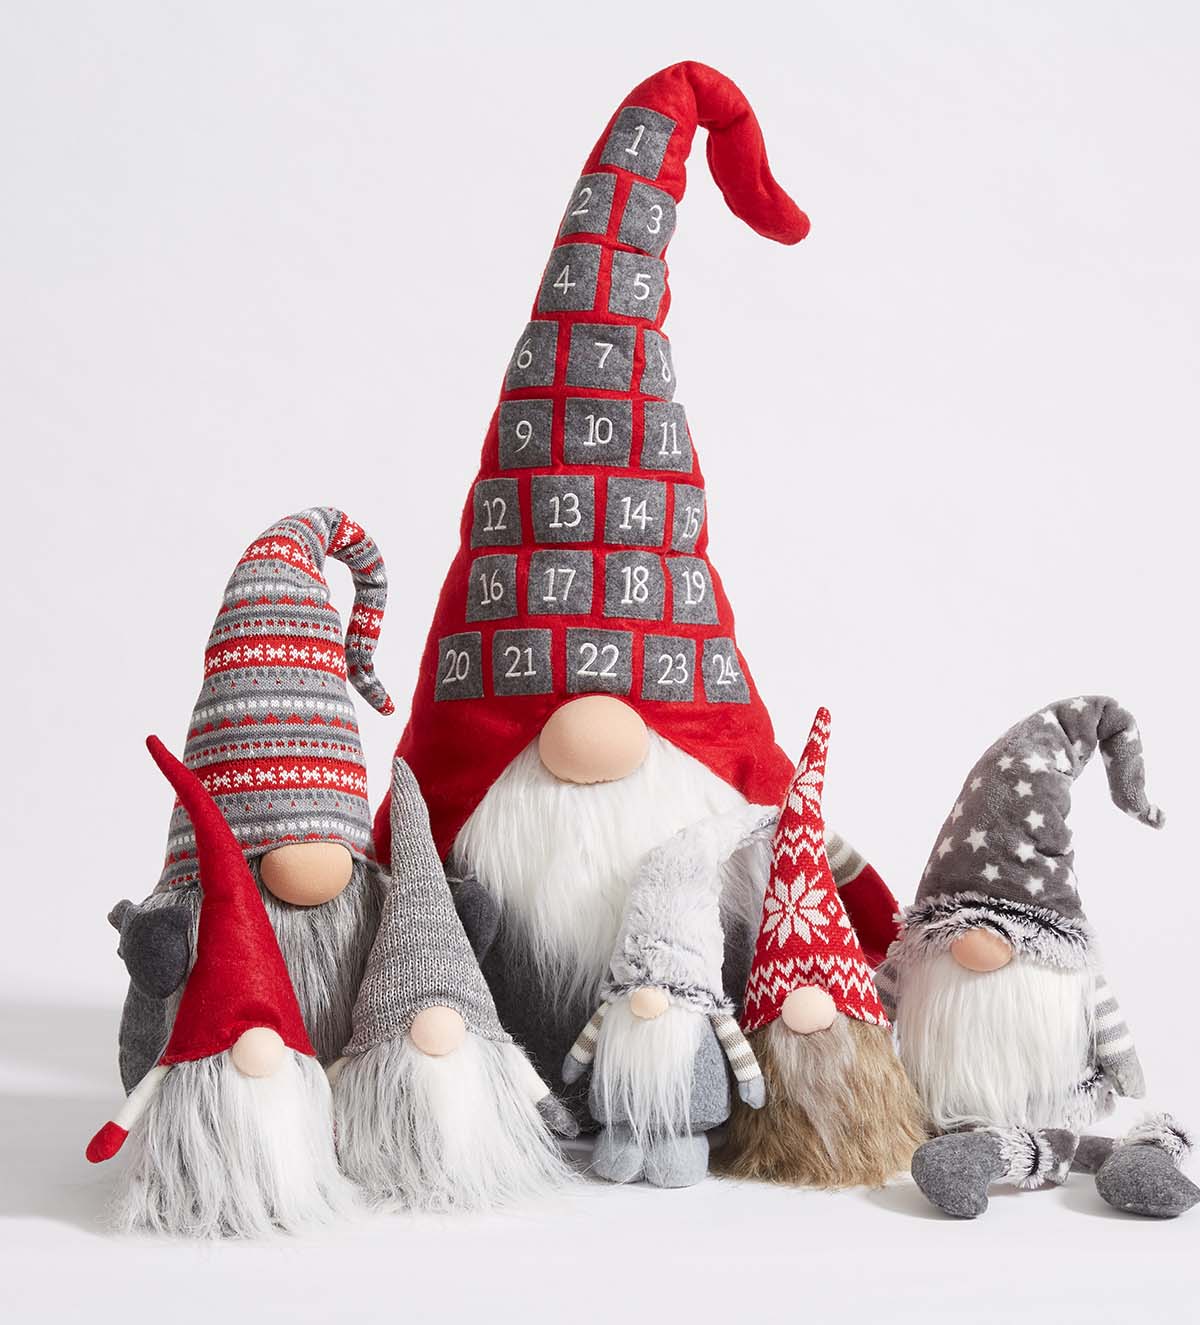 GlucksteinHome Holiday Gnomes 